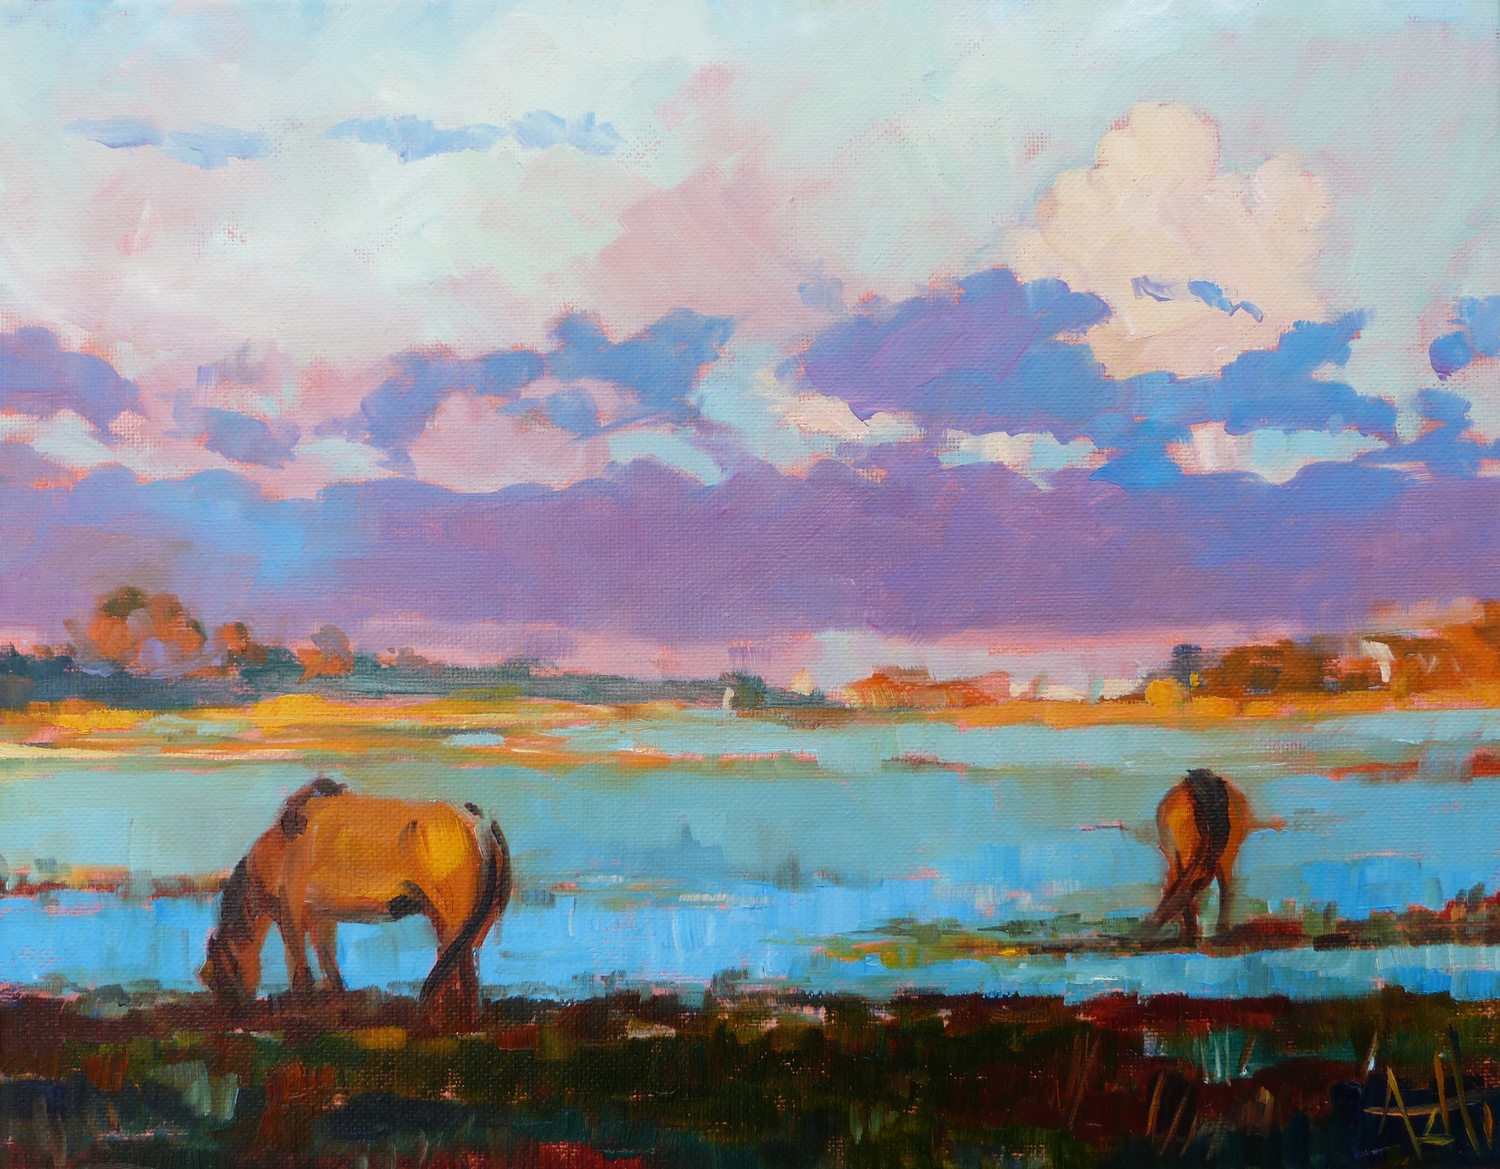 SOLD, Horses on Carrot Island, Copyright 2014 Hirschten, Oil on Canvas, 11" x 14"